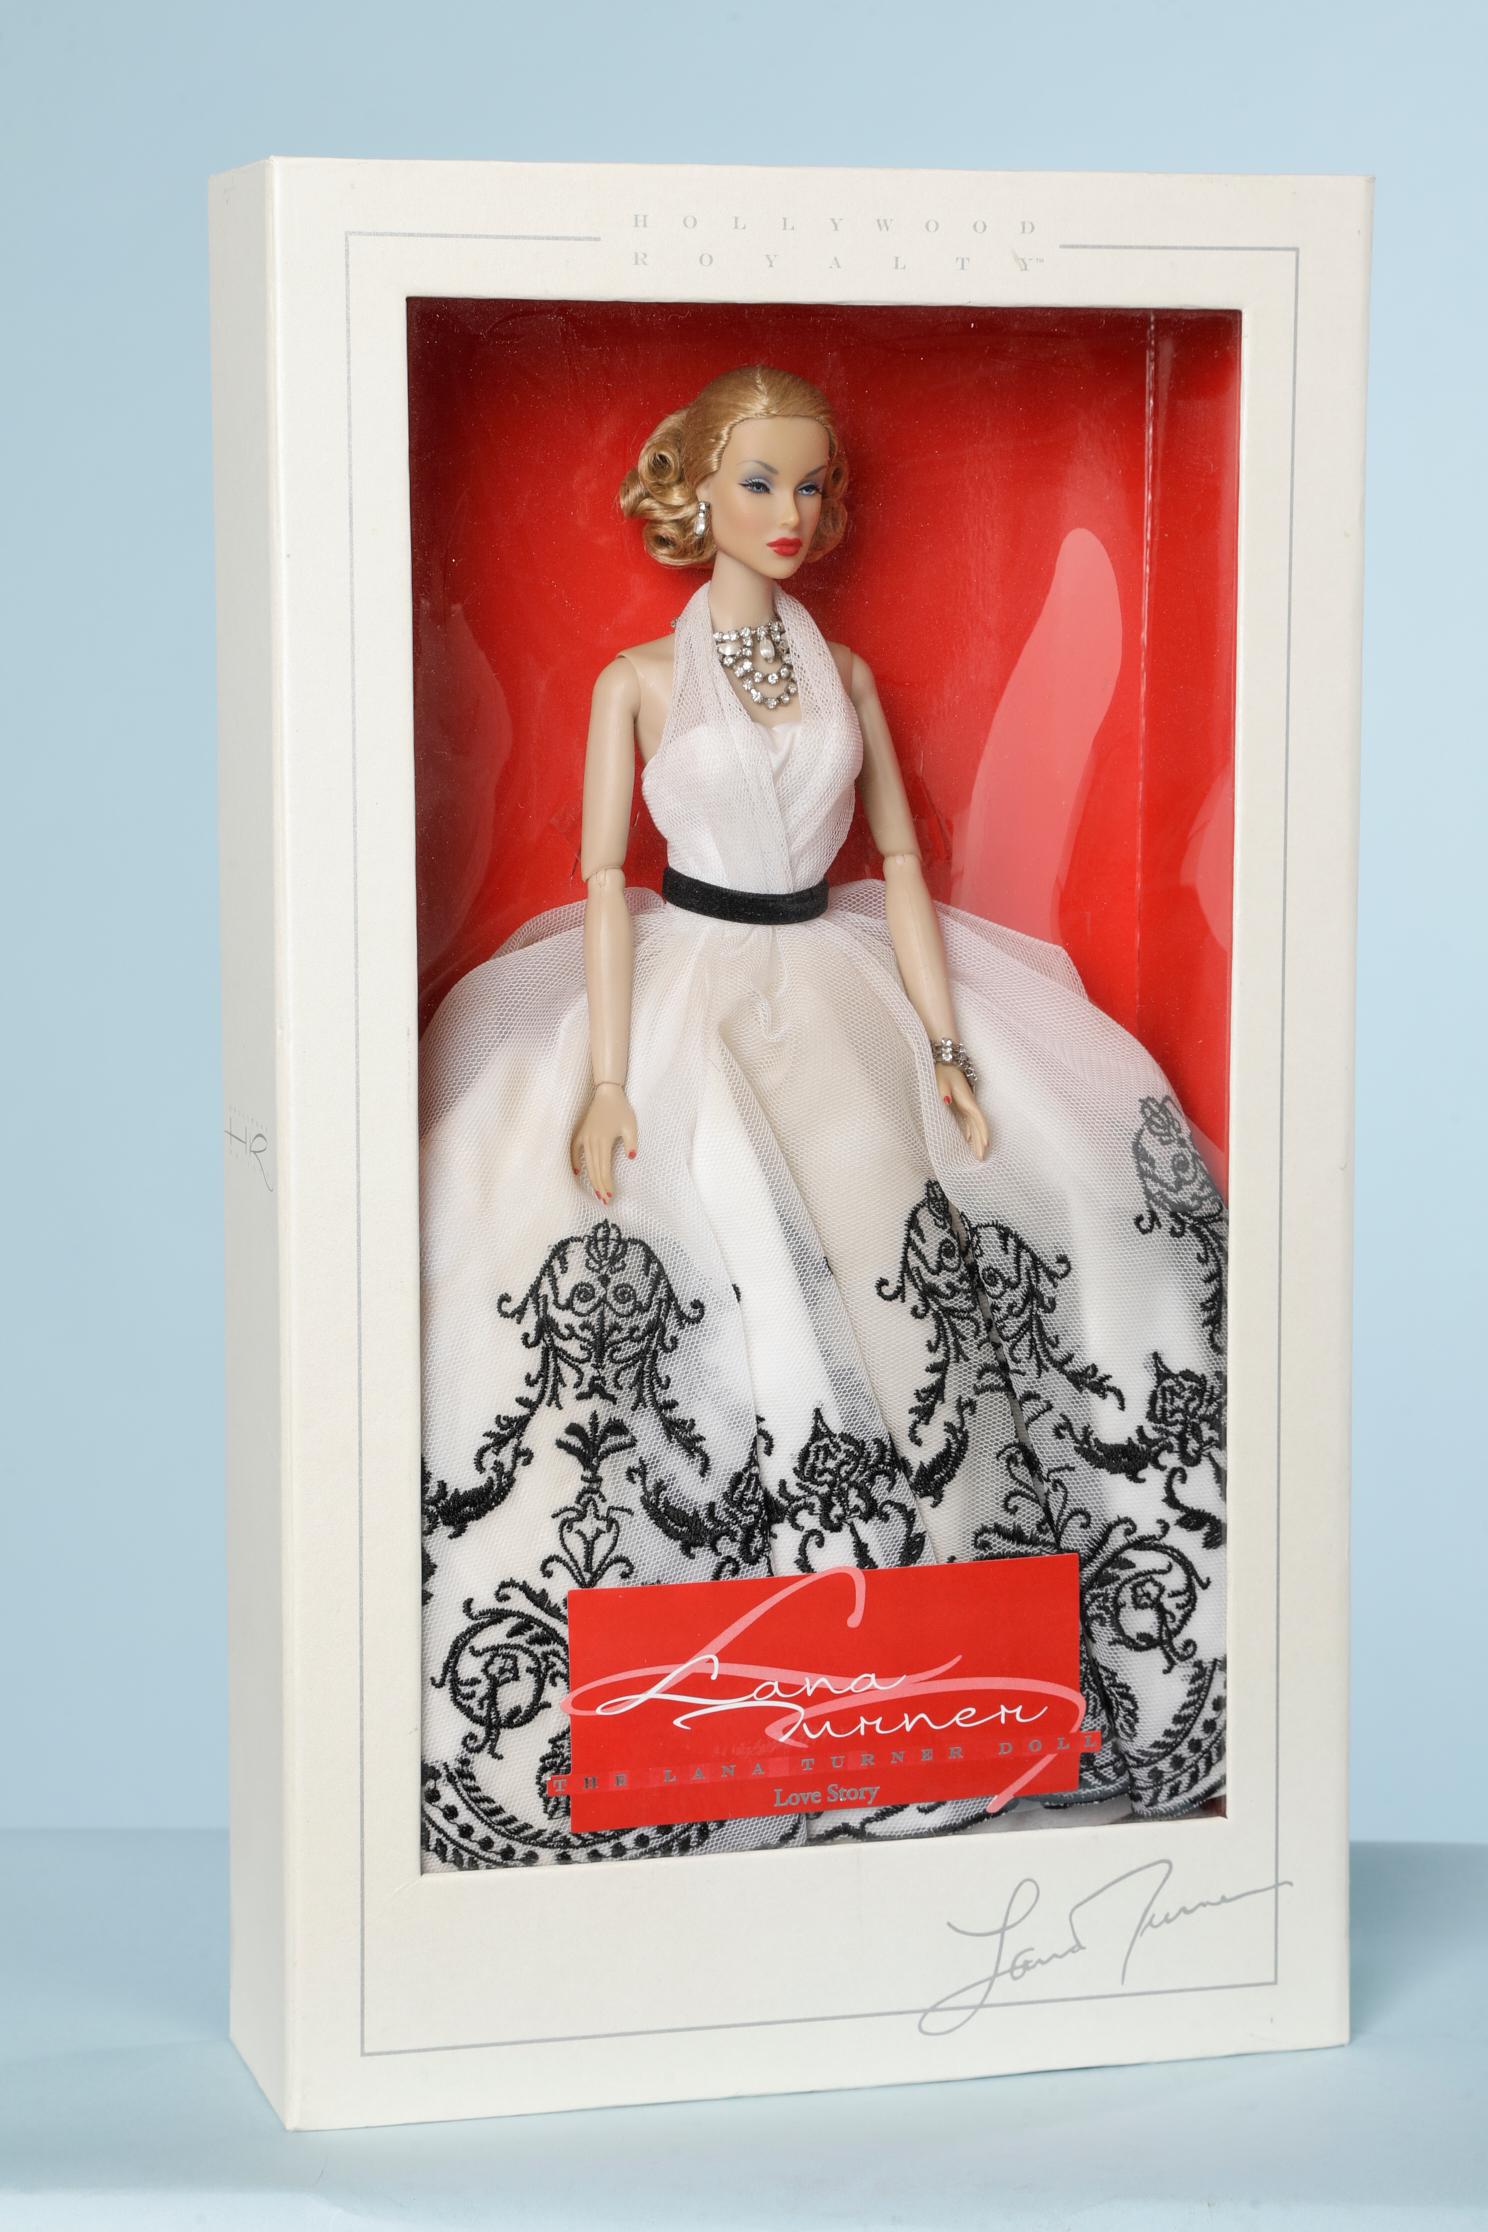 The Lana Turner doll / Hollywood Royalty